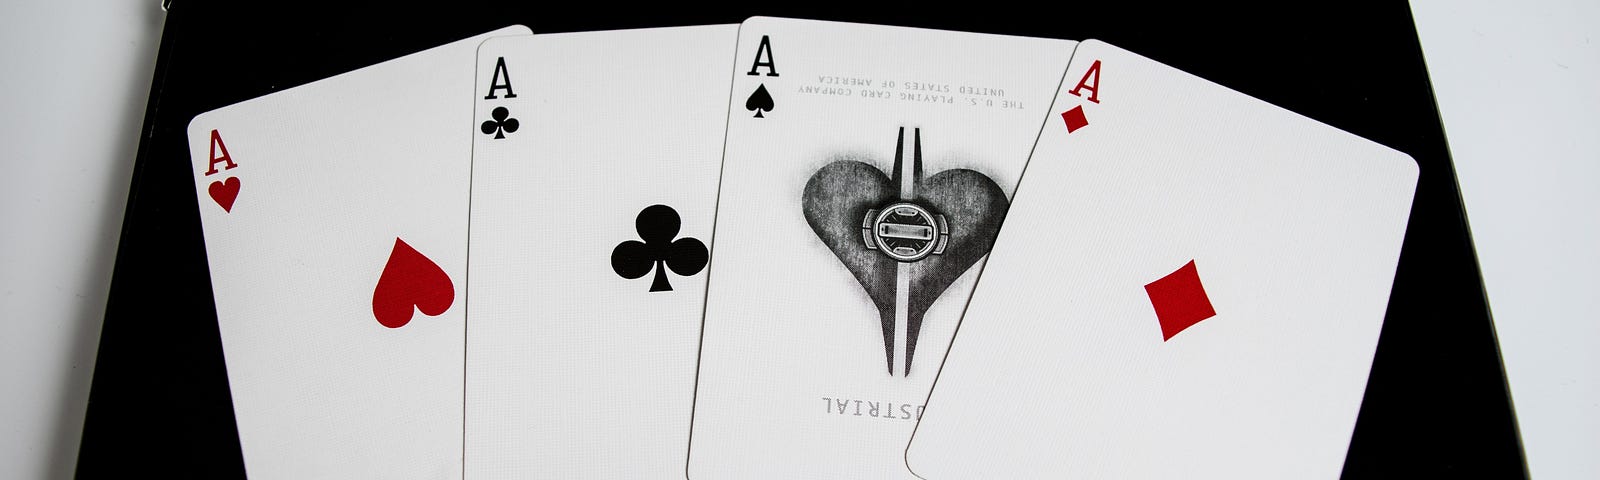 Ace bet blackjack business.